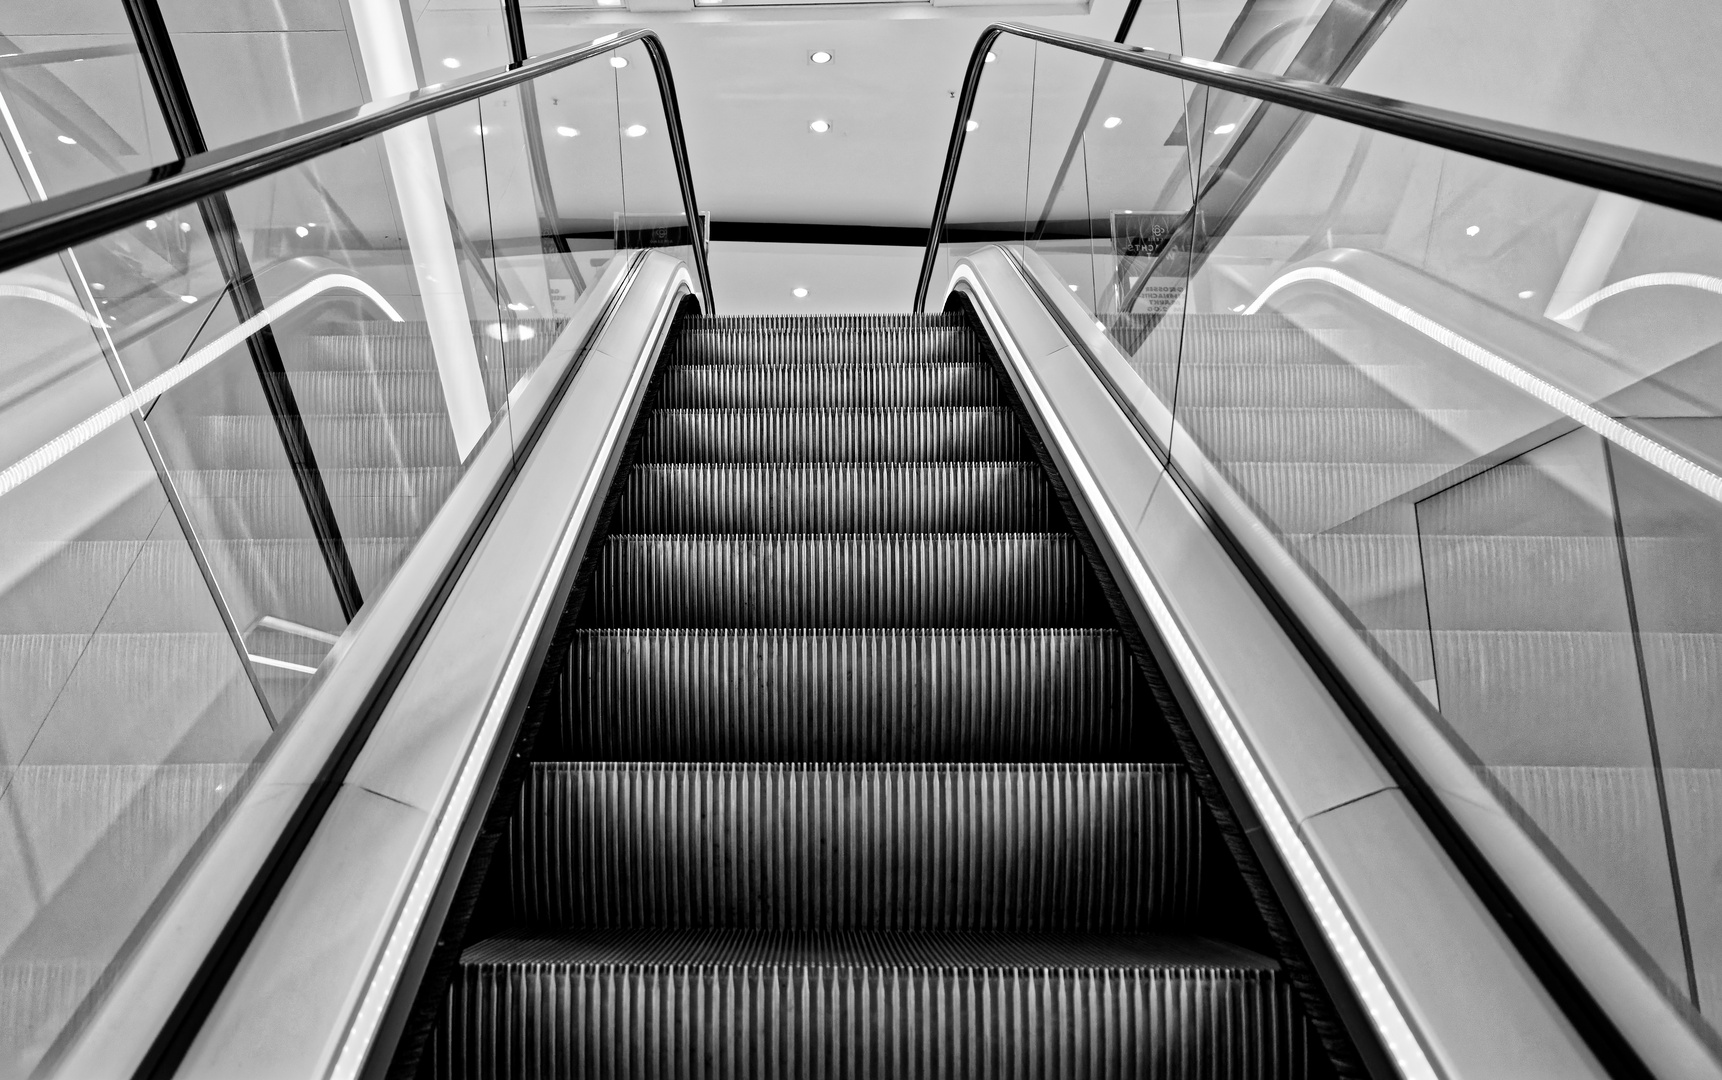  escalator